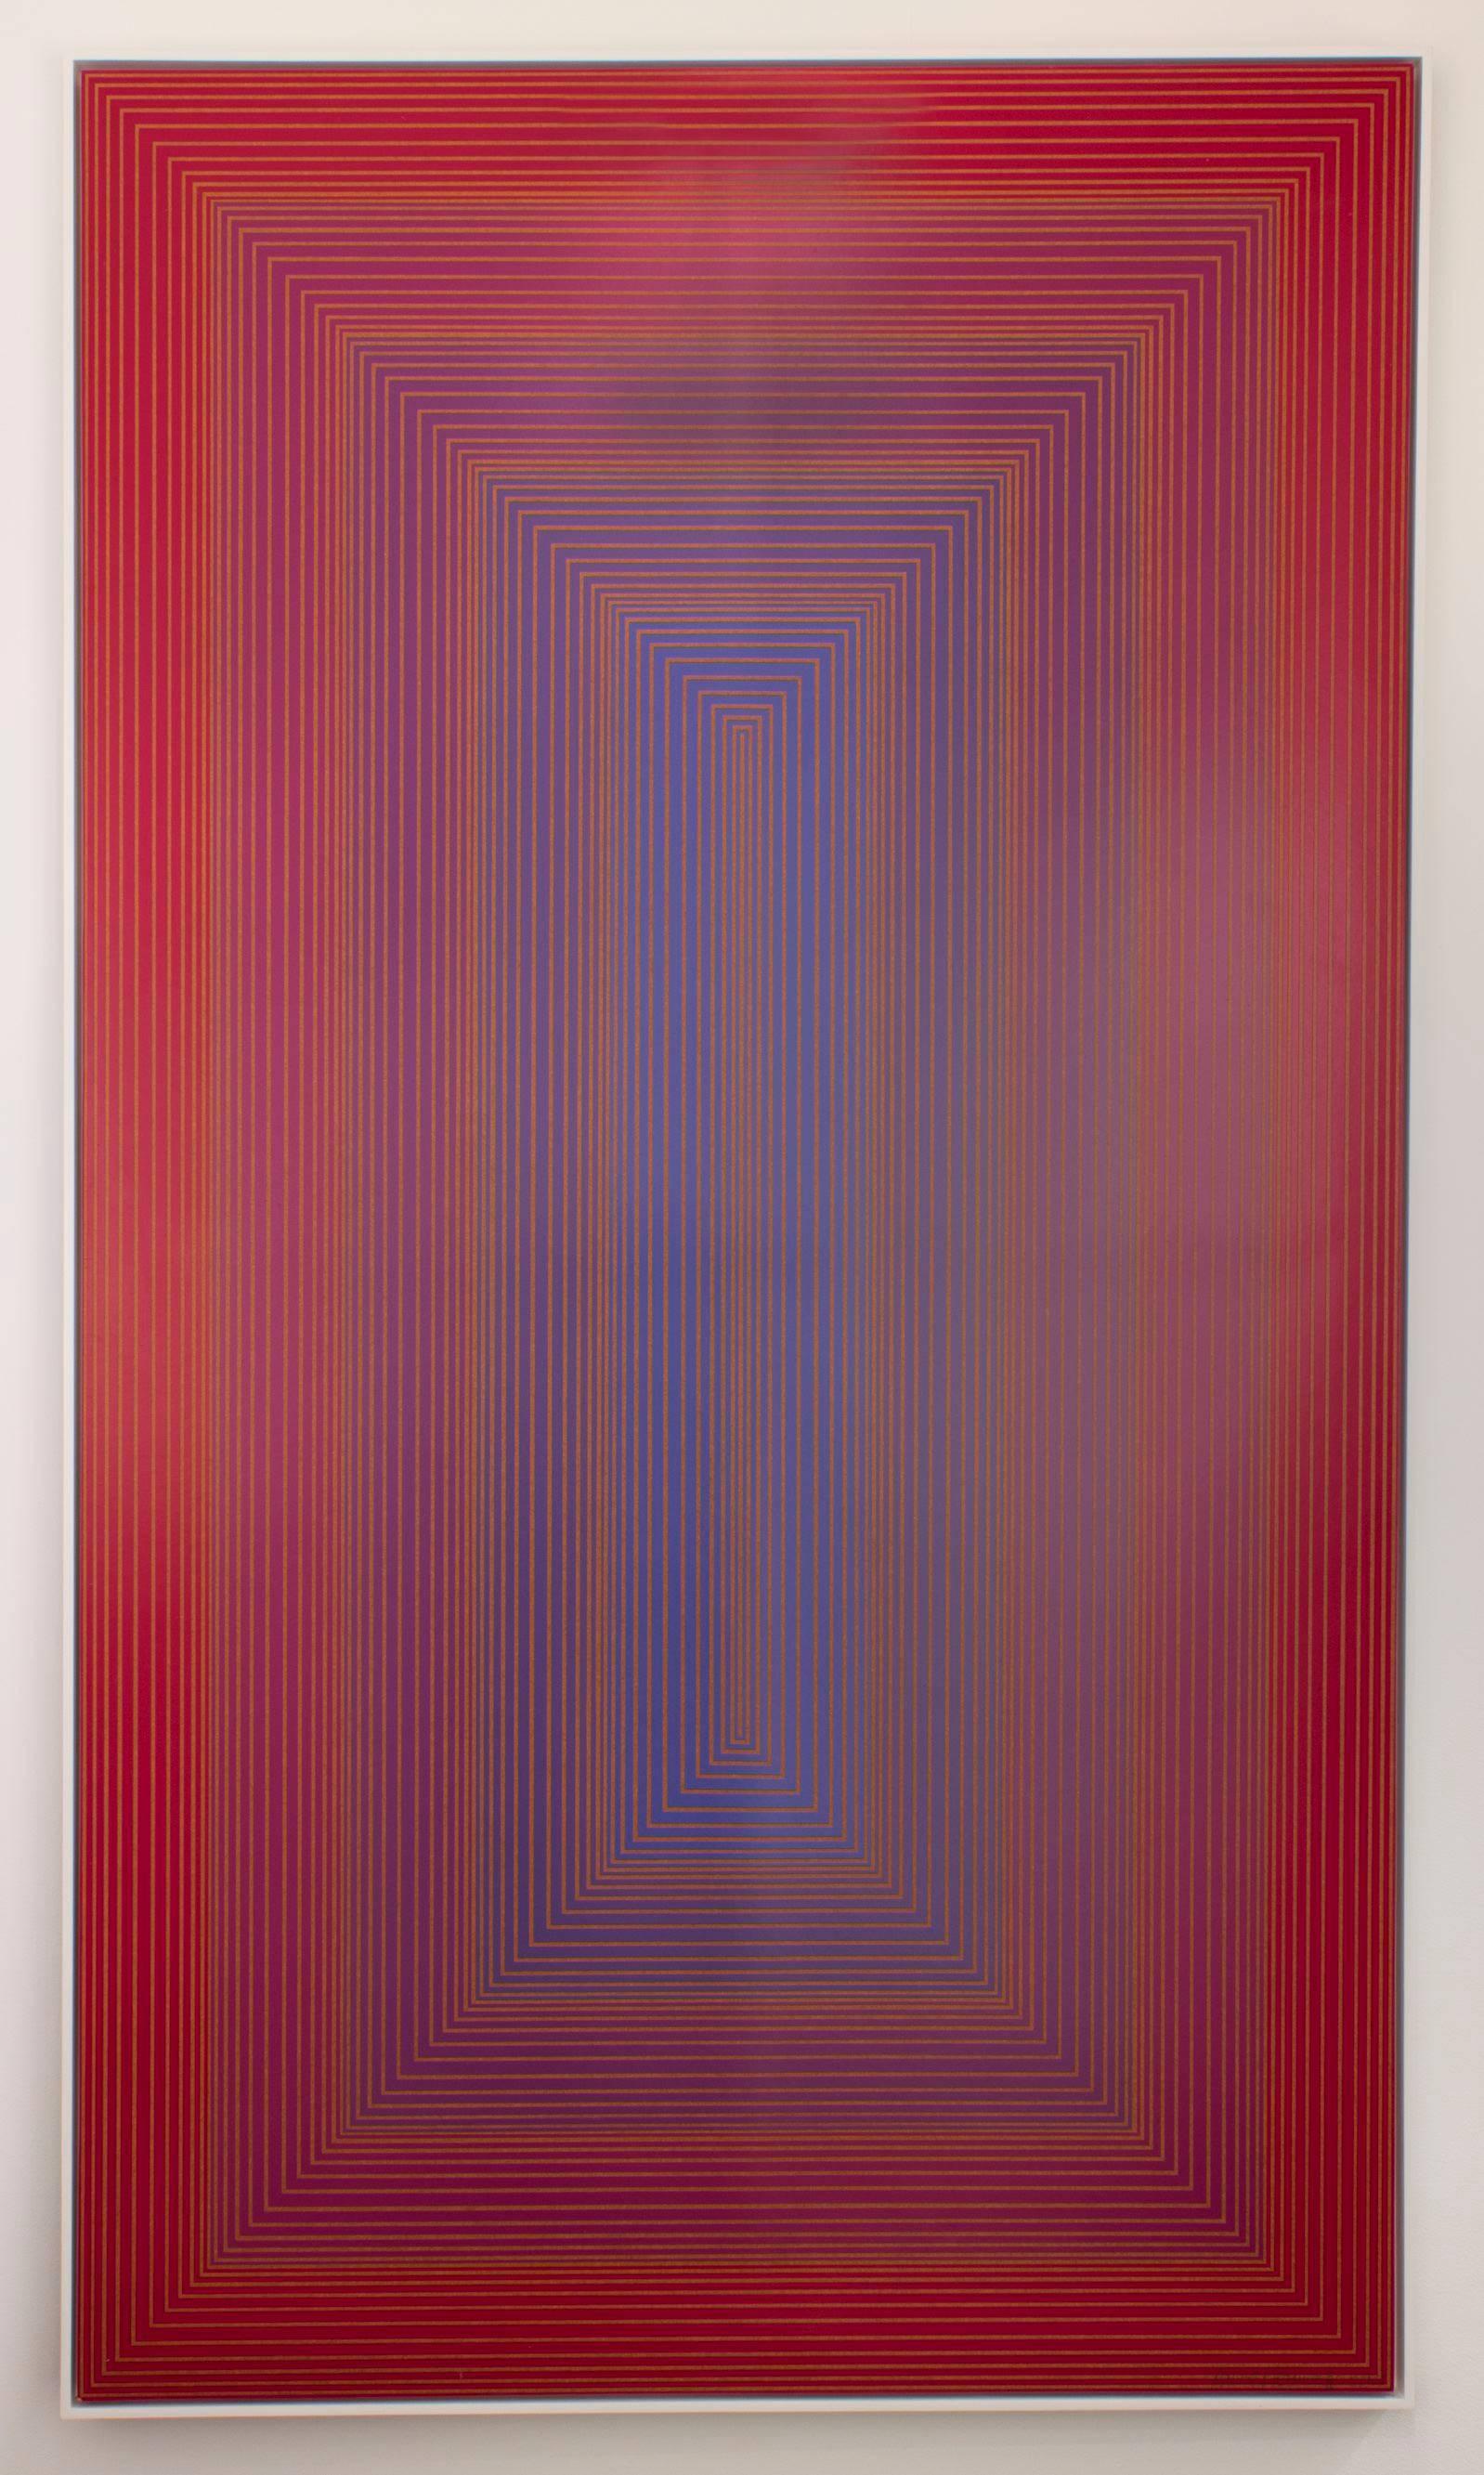 Richard Anuszkiewicz Abstract Print – Rotes bis blaues Portal